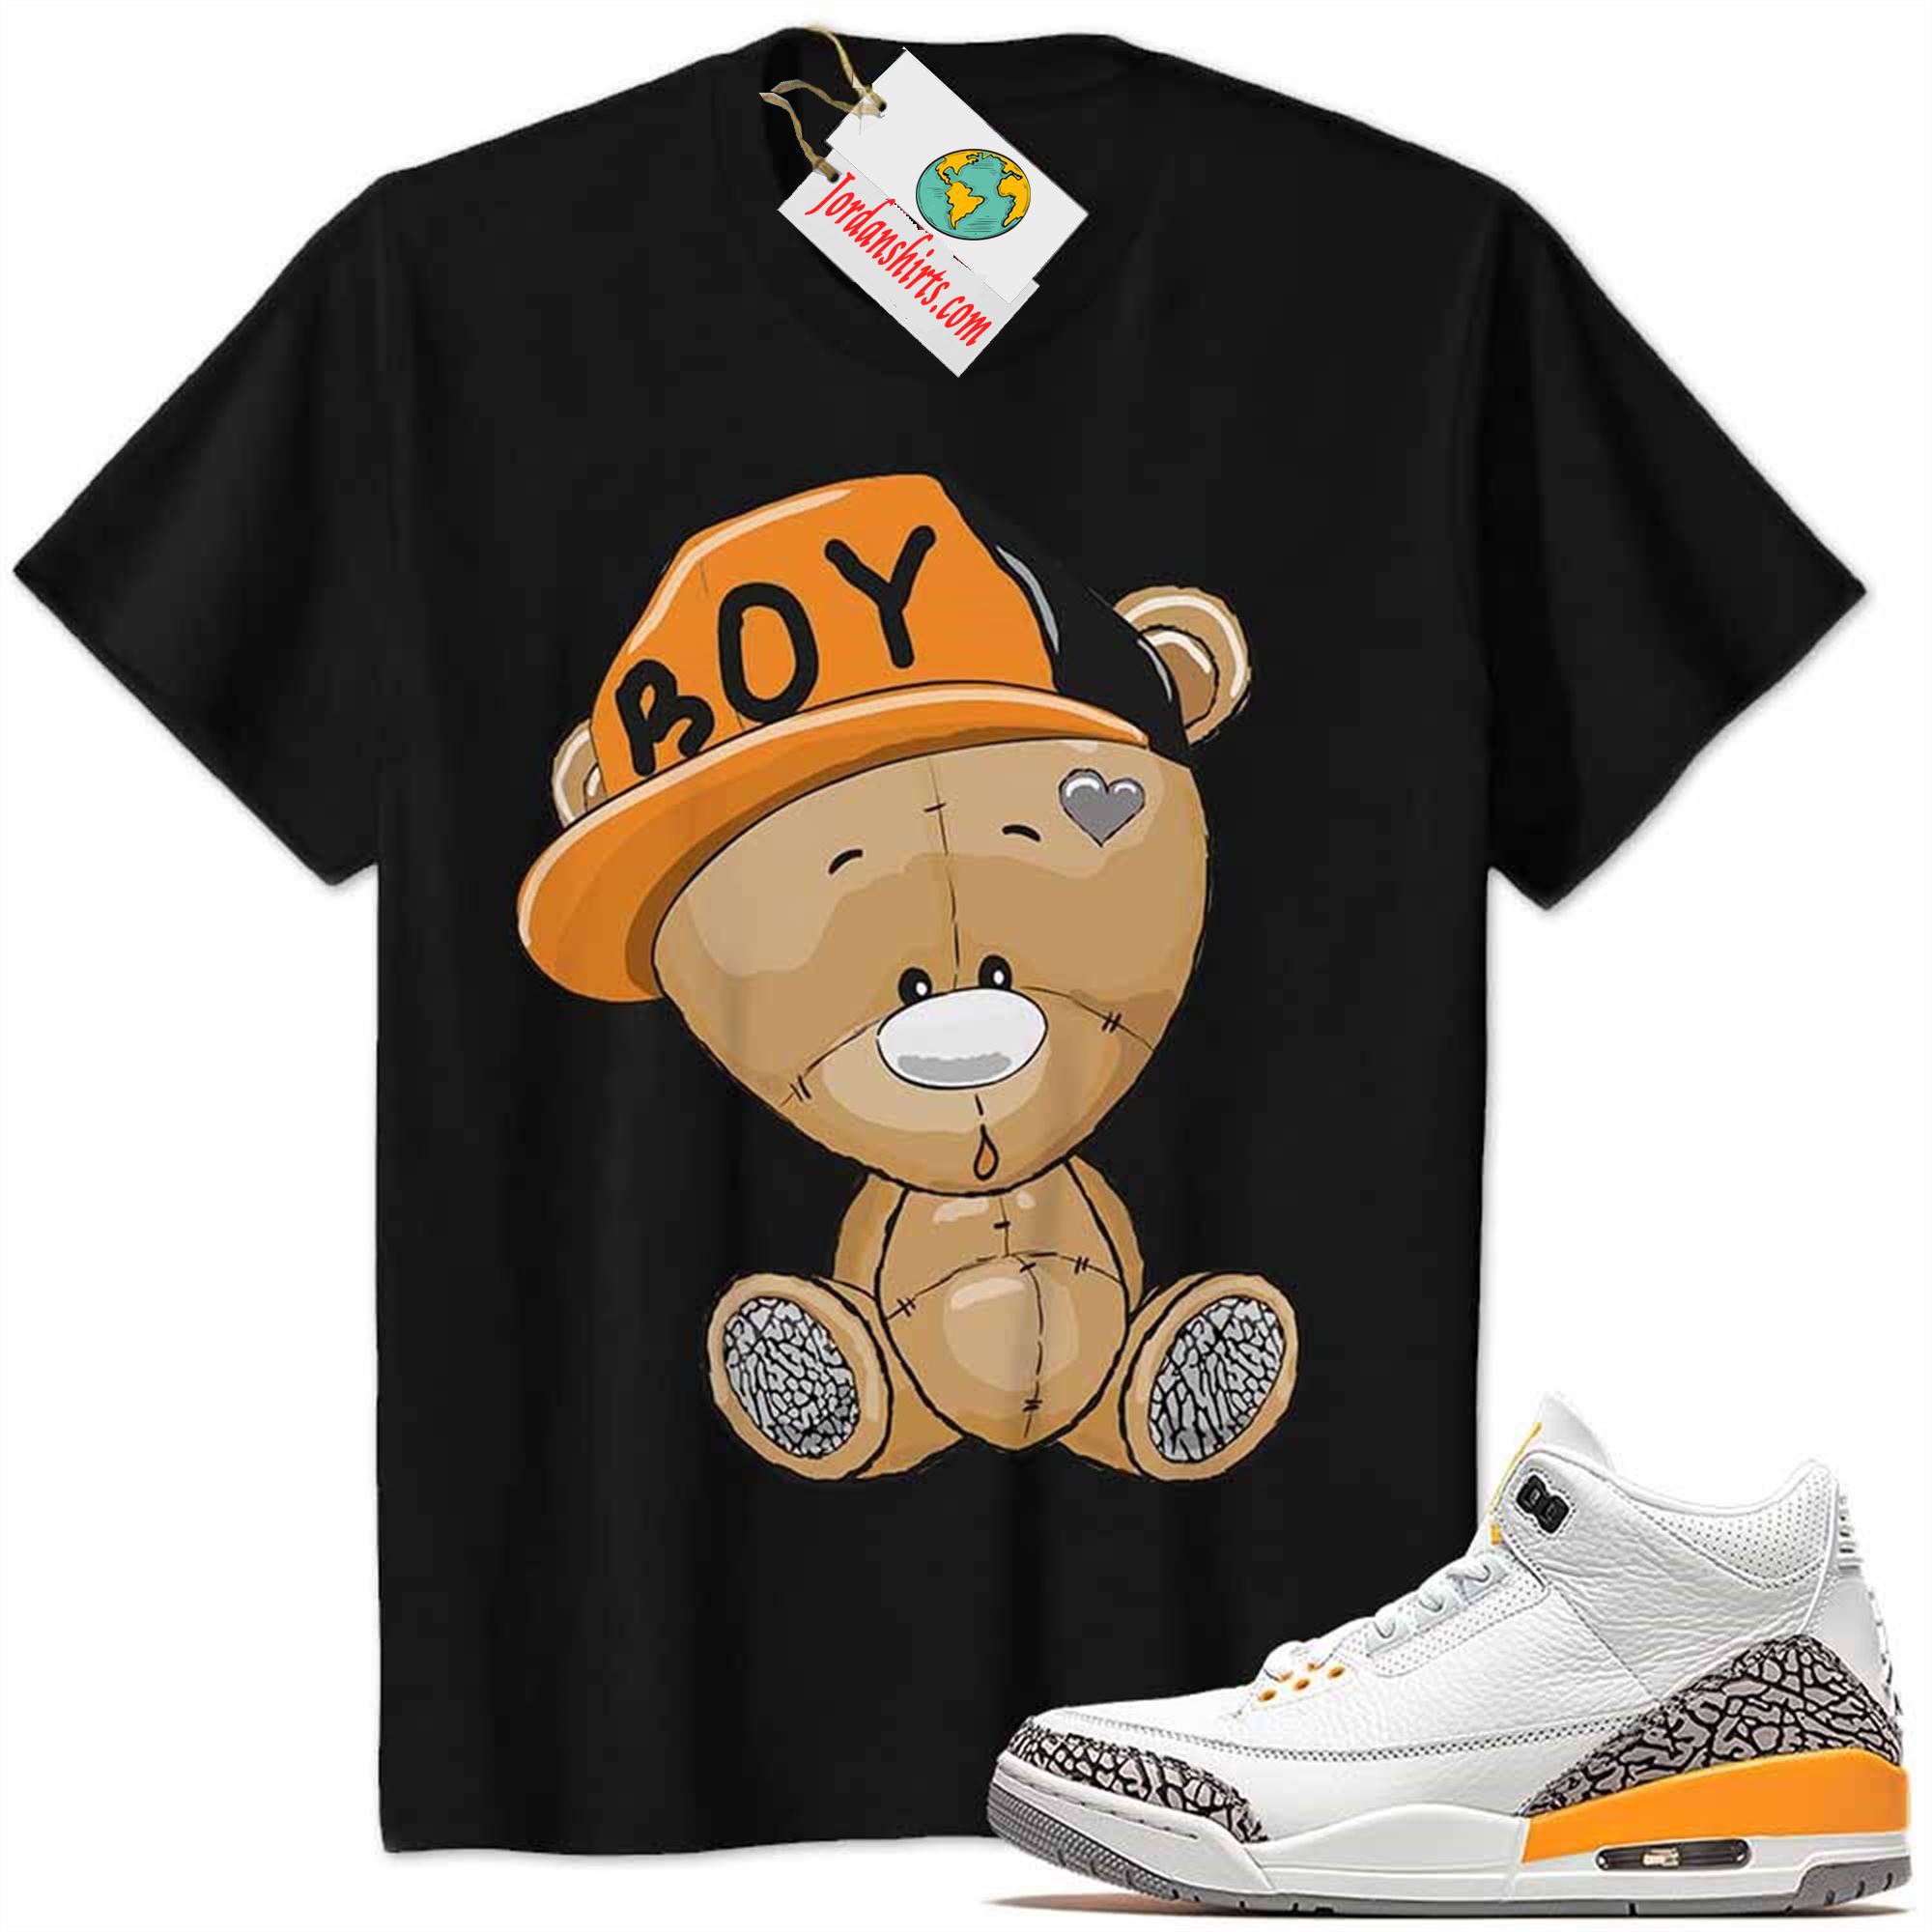 Jordan 3 Shirt, Jordan 3 Laser Orange Shirt Cute Baby Teddy Bear Black Plus Size Up To 5xl